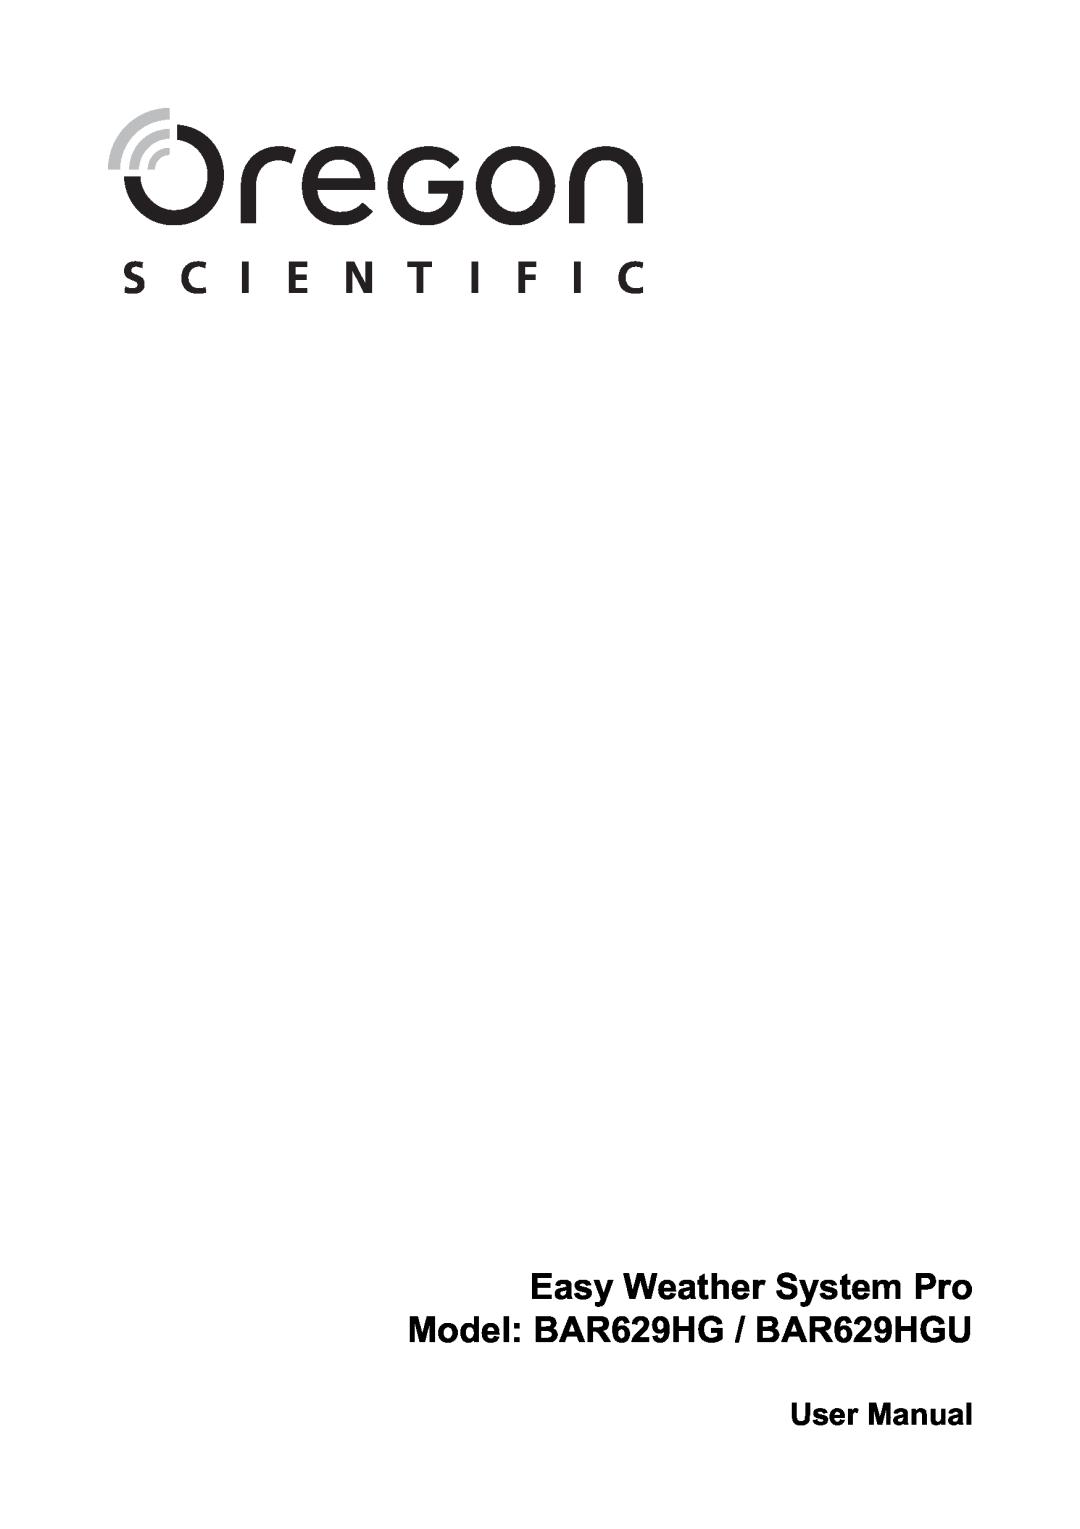 Oregon Scientific user manual User Manual, Easy Weather System Pro Model BAR629HG / BAR629HGU 